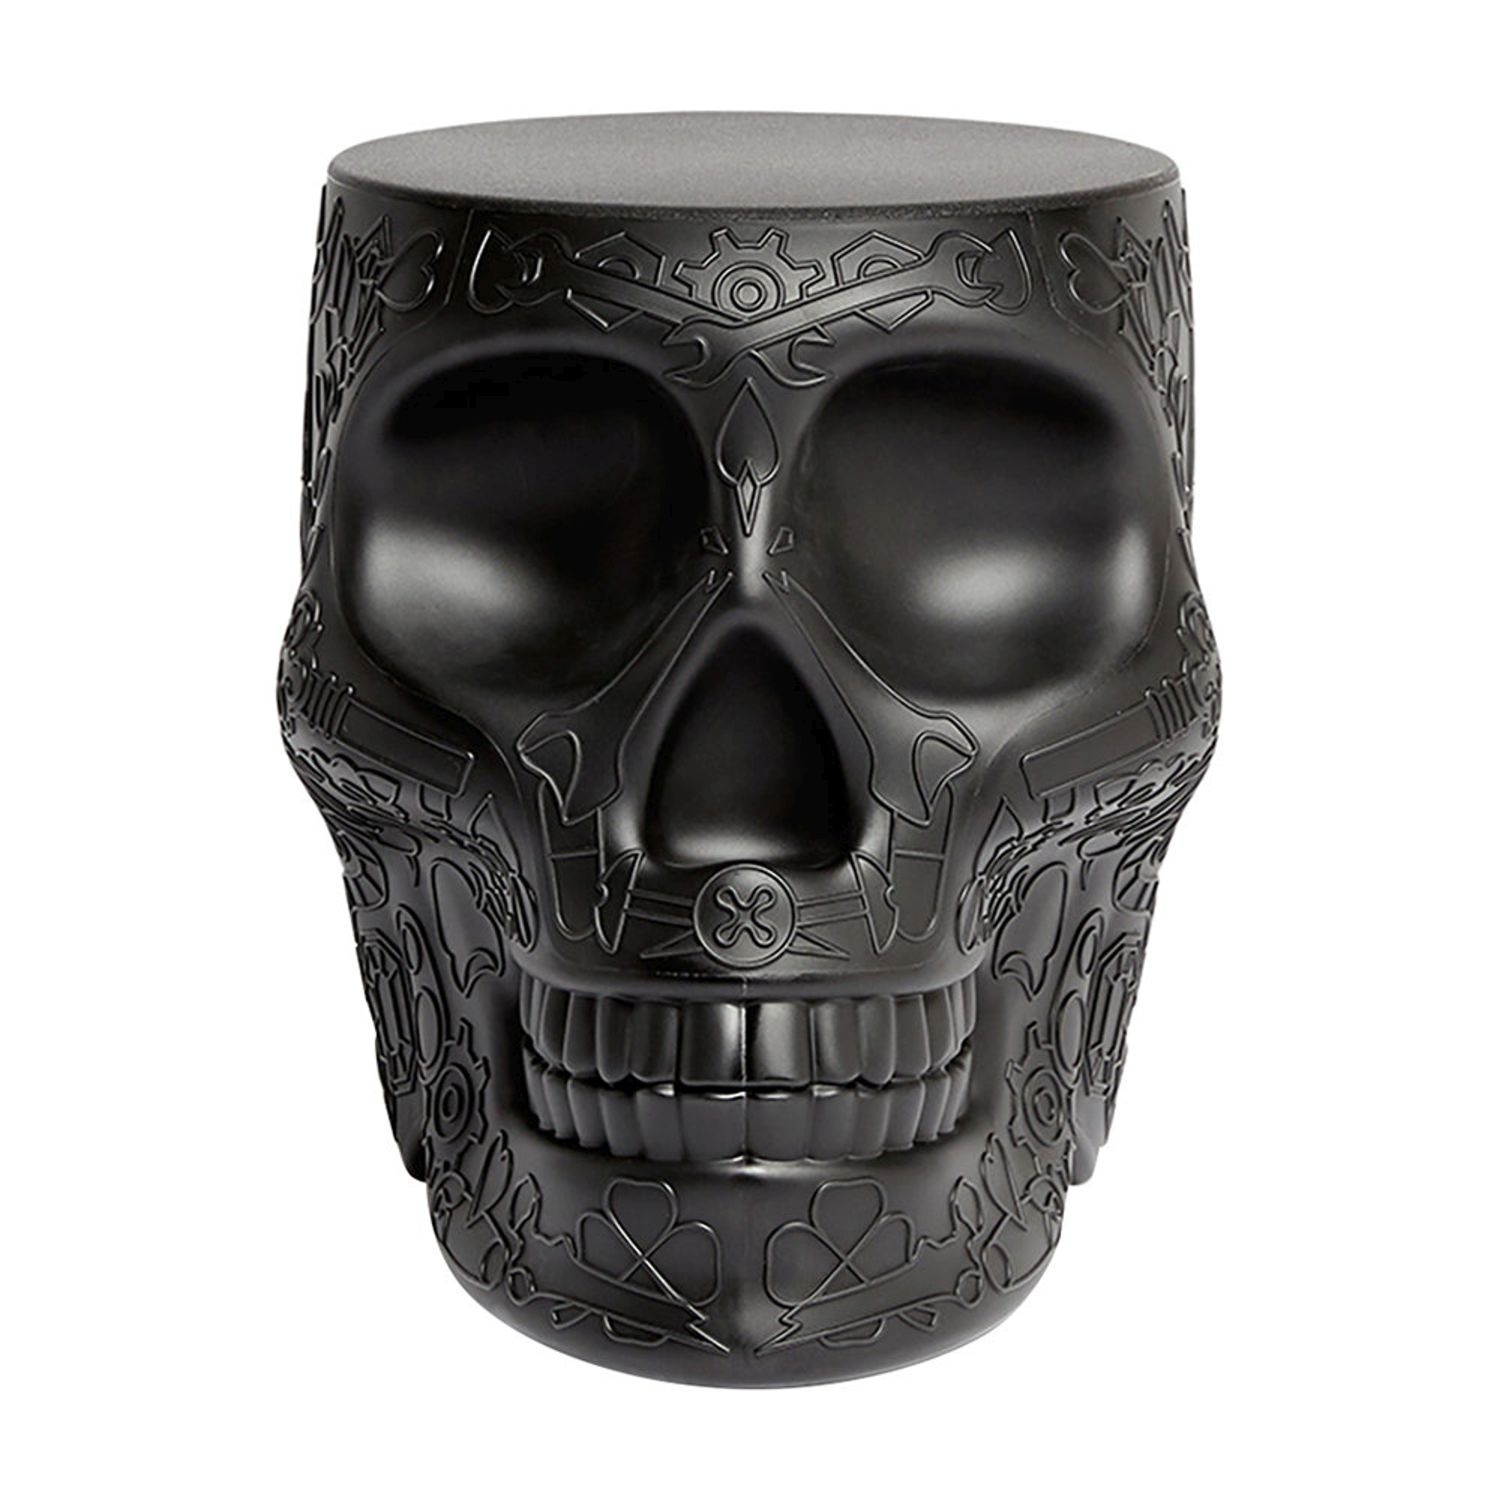 Mexico Skull Stool/Side Table, black, by Qeeboo, £155, Amara (Amara/PA)